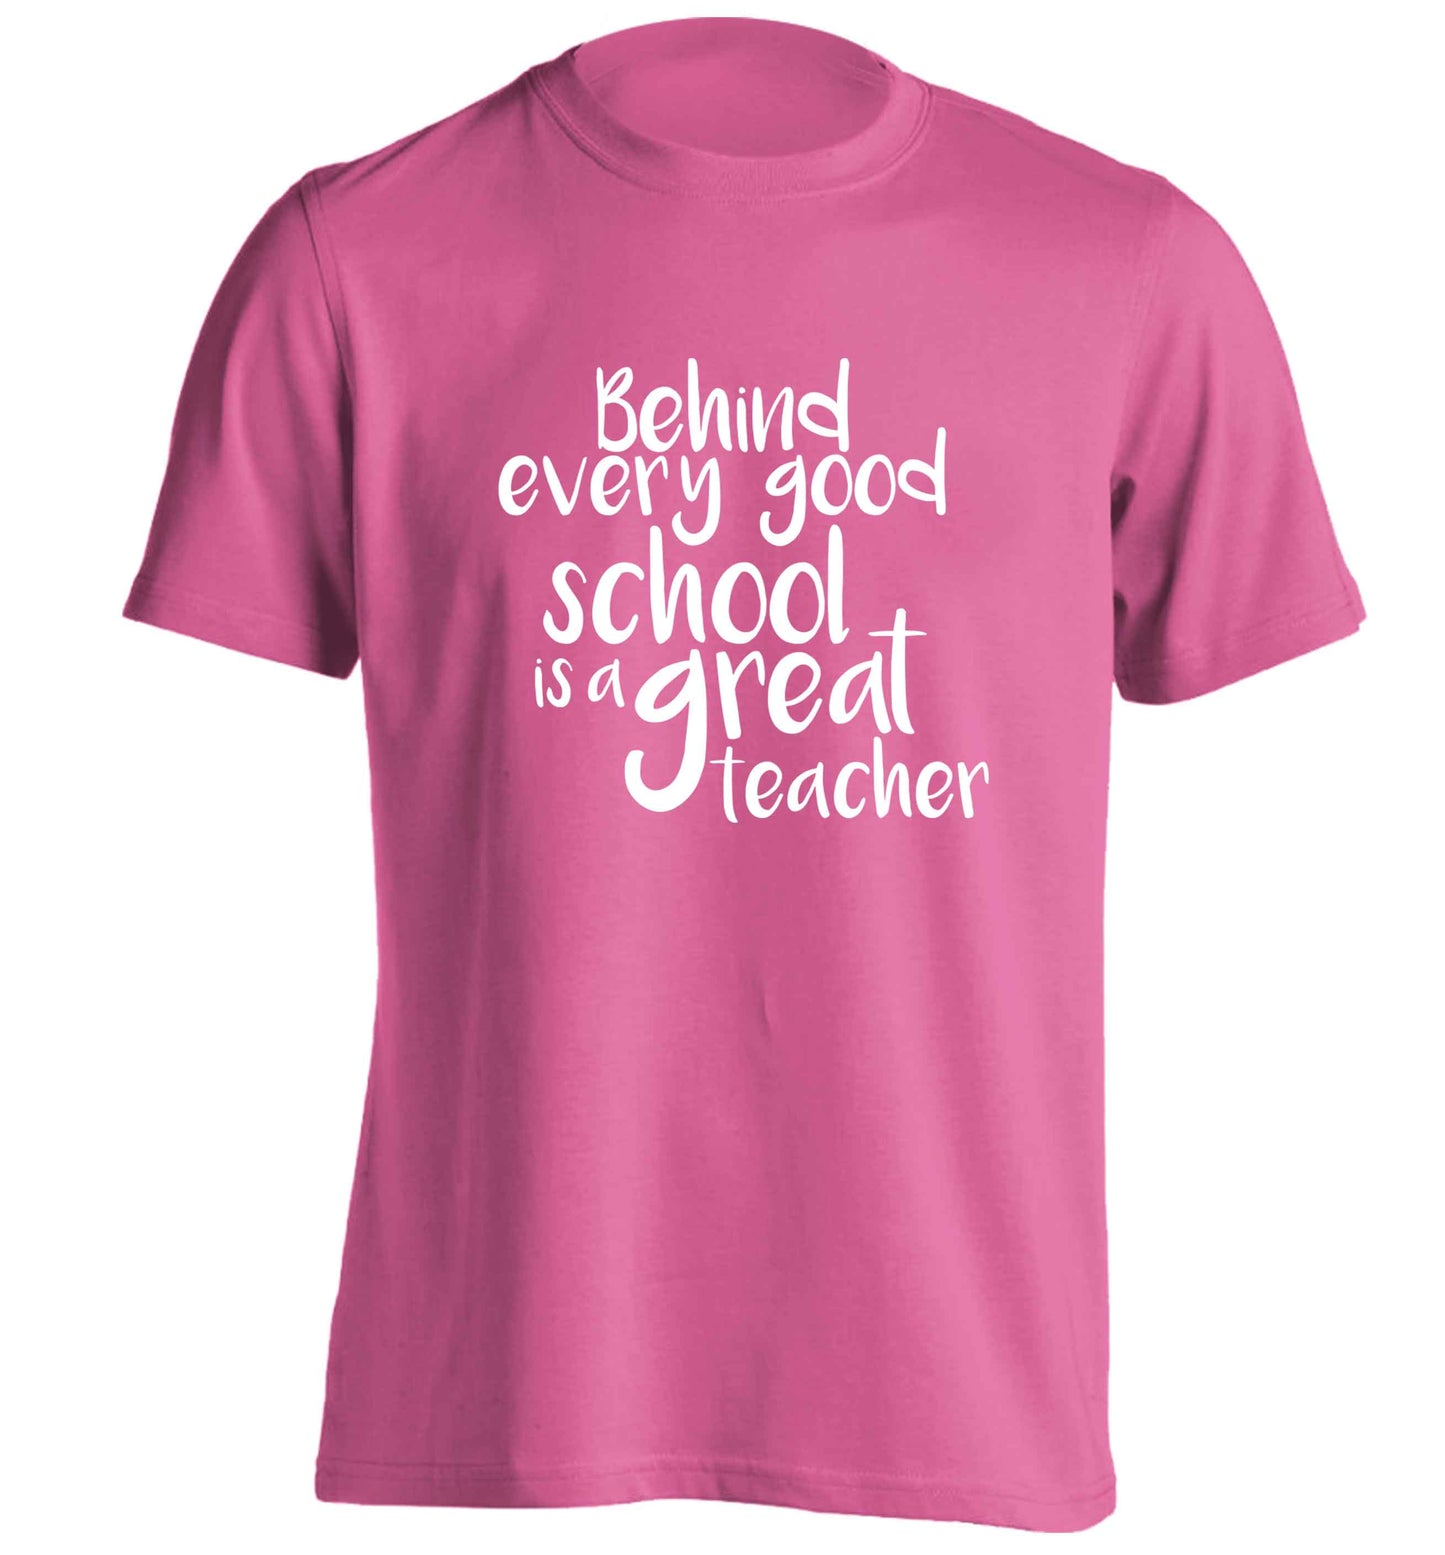 Behind every good school is a great teacher adults unisex pink Tshirt 2XL